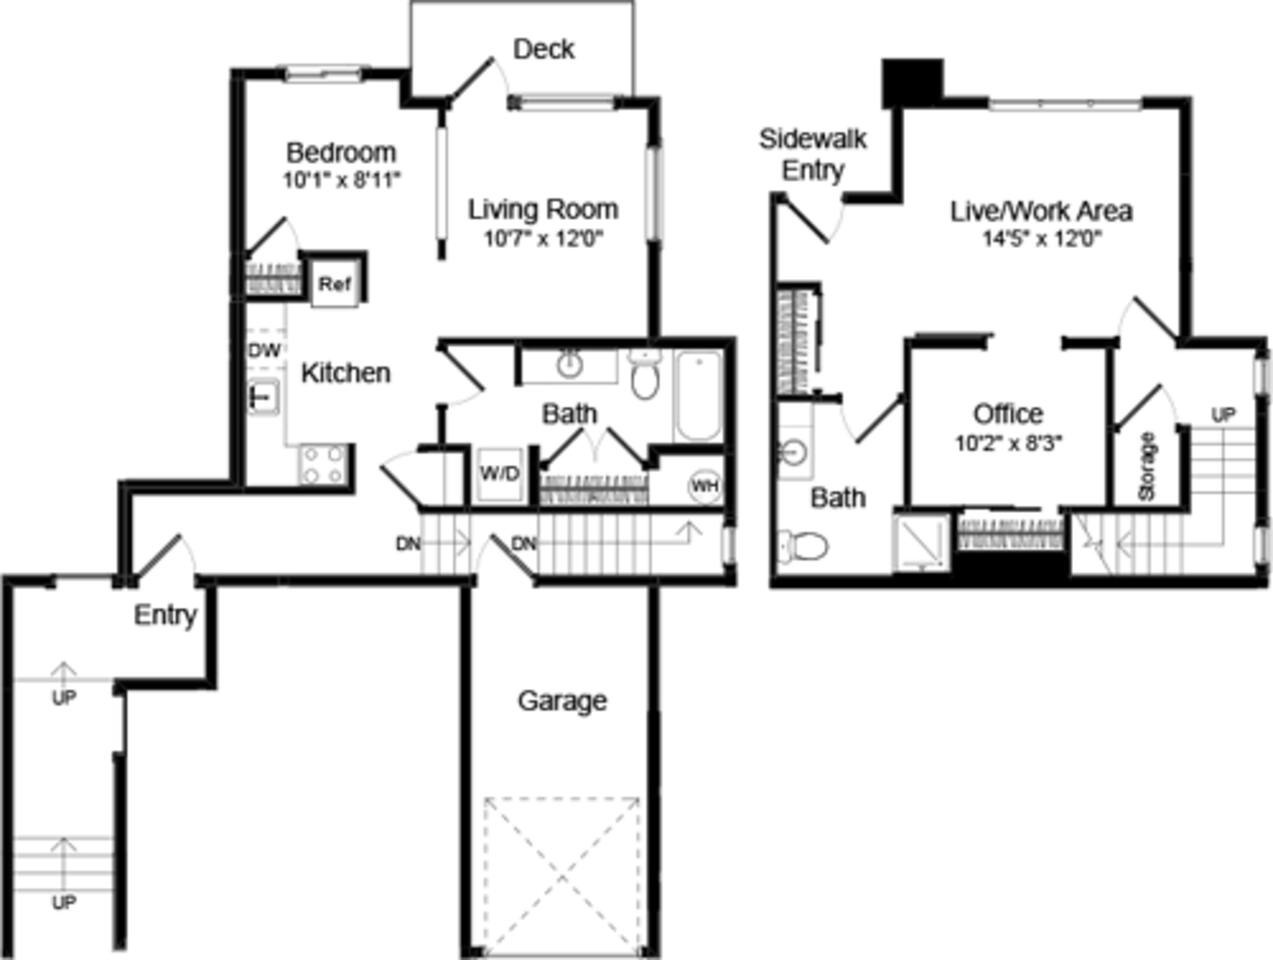 Floorplan diagram for Live Work 1 - Phase III, showing 1 bedroom